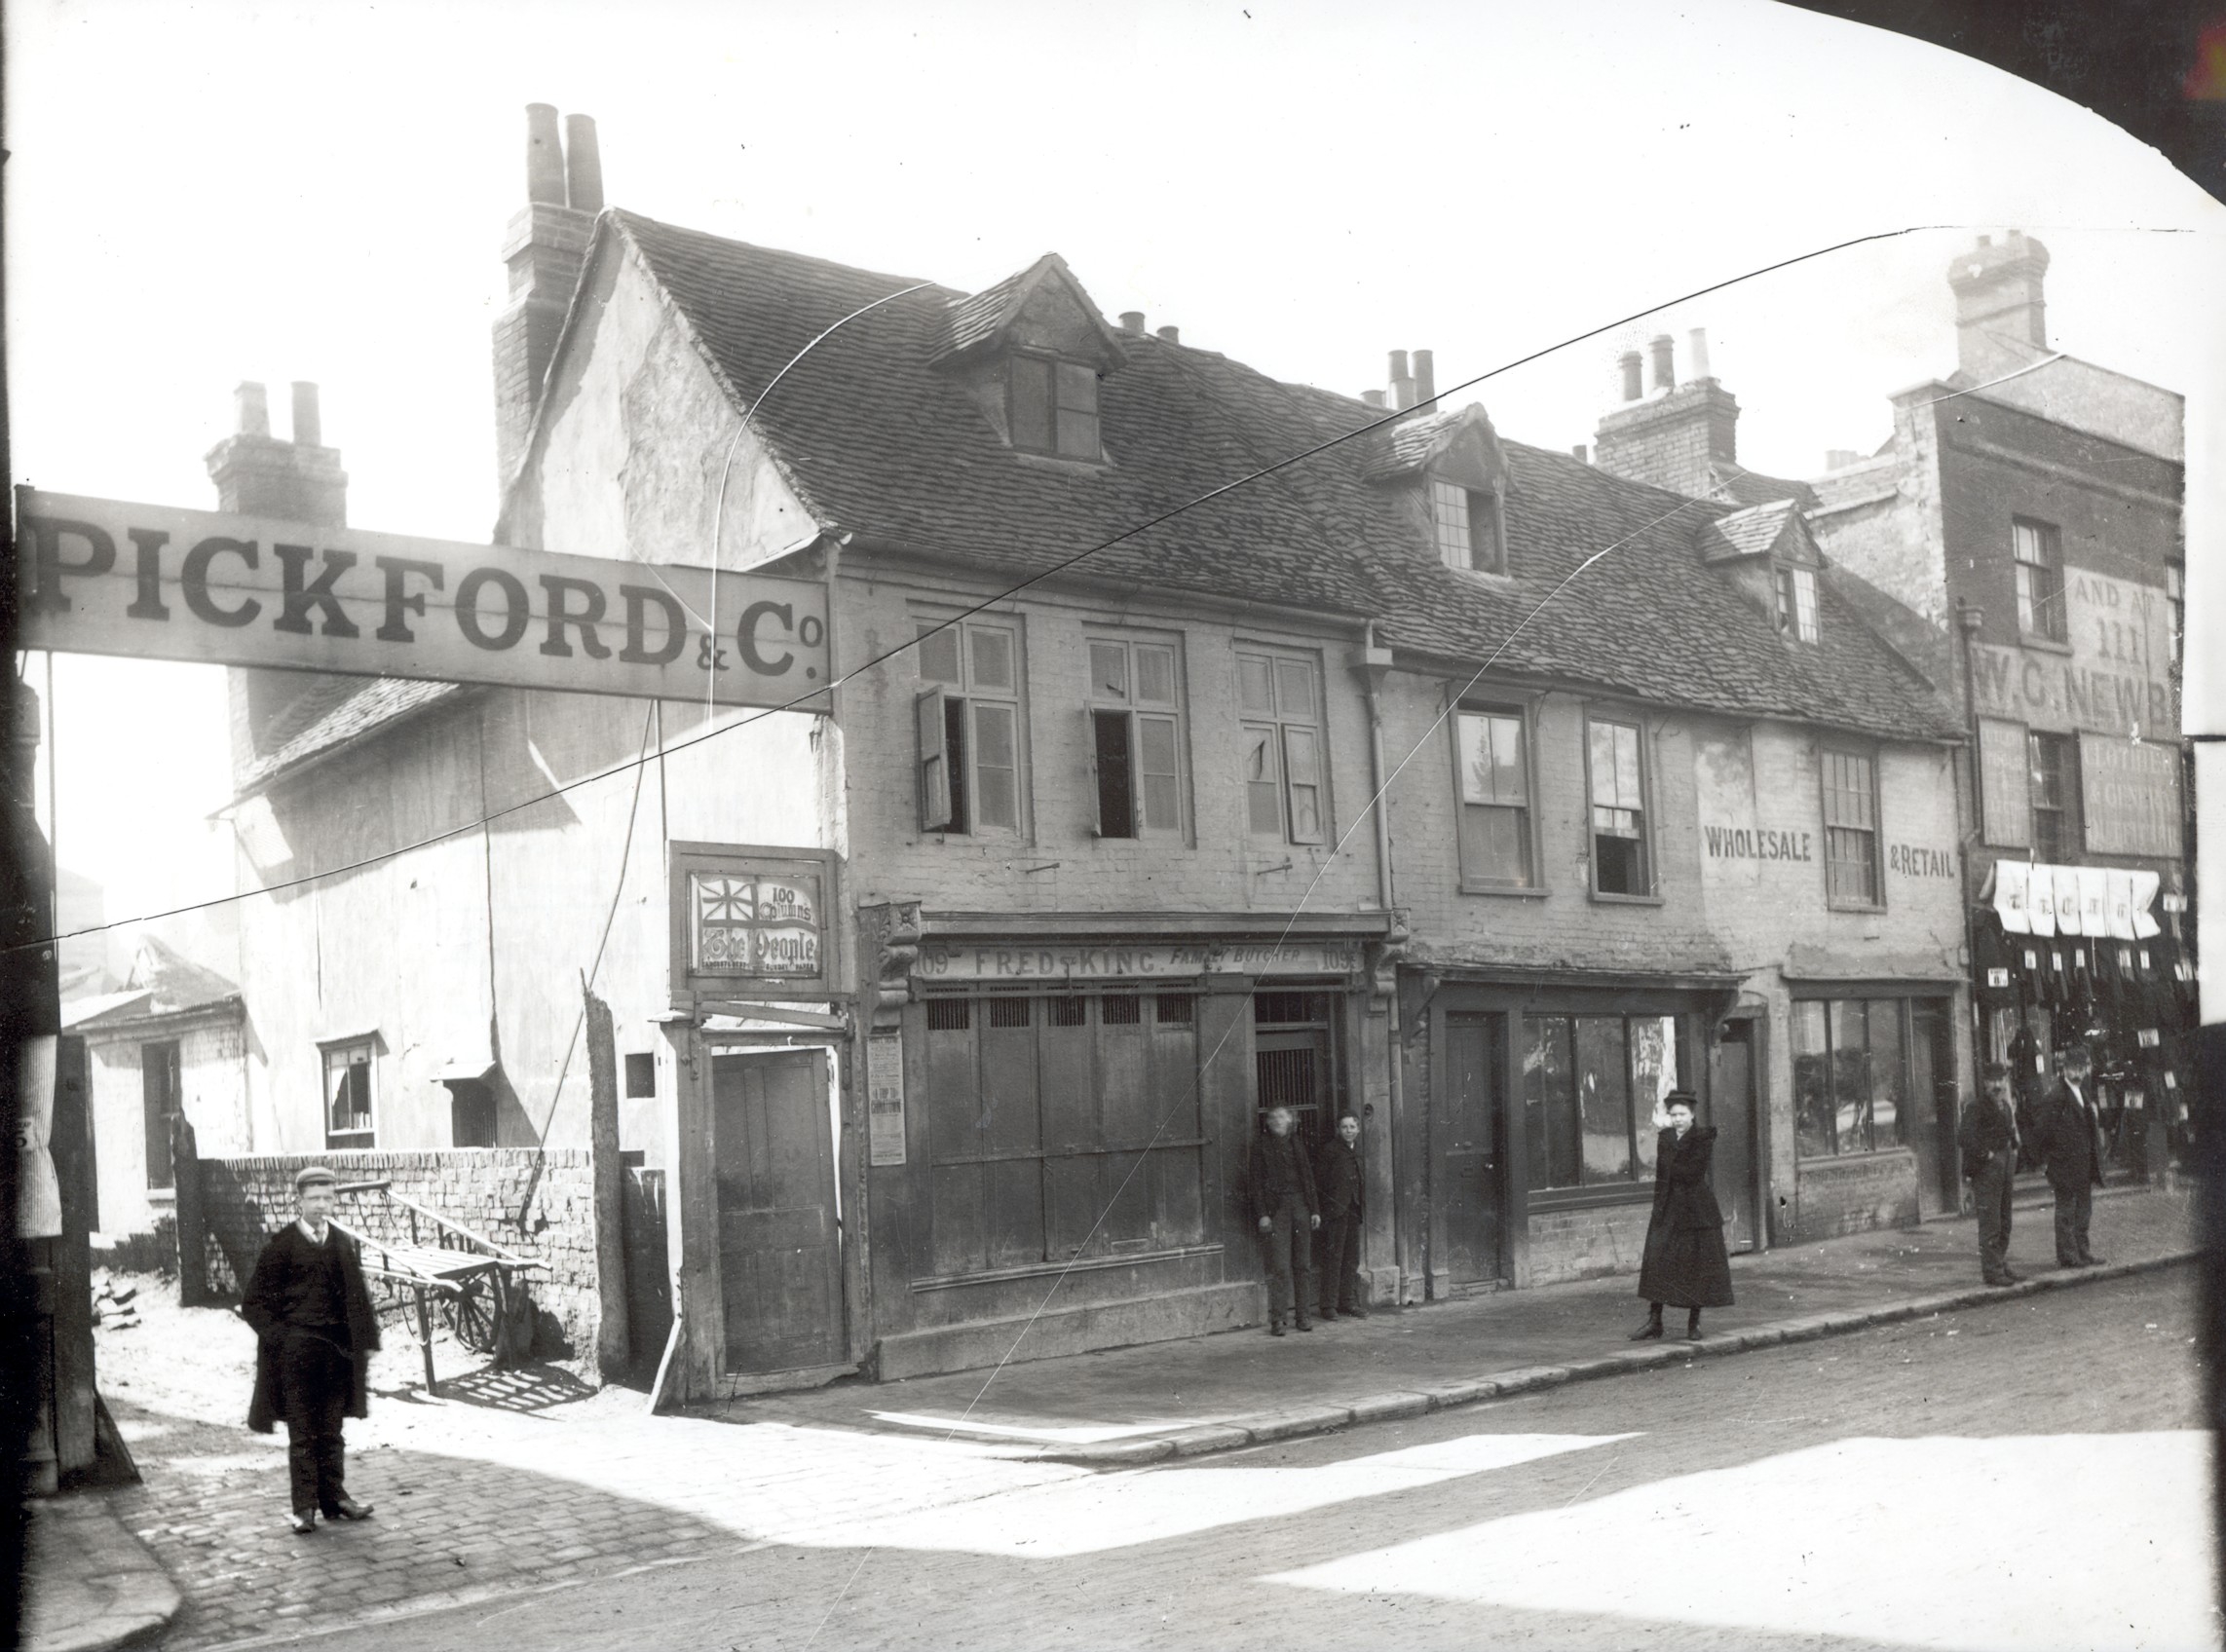 Pickford & Co. - England